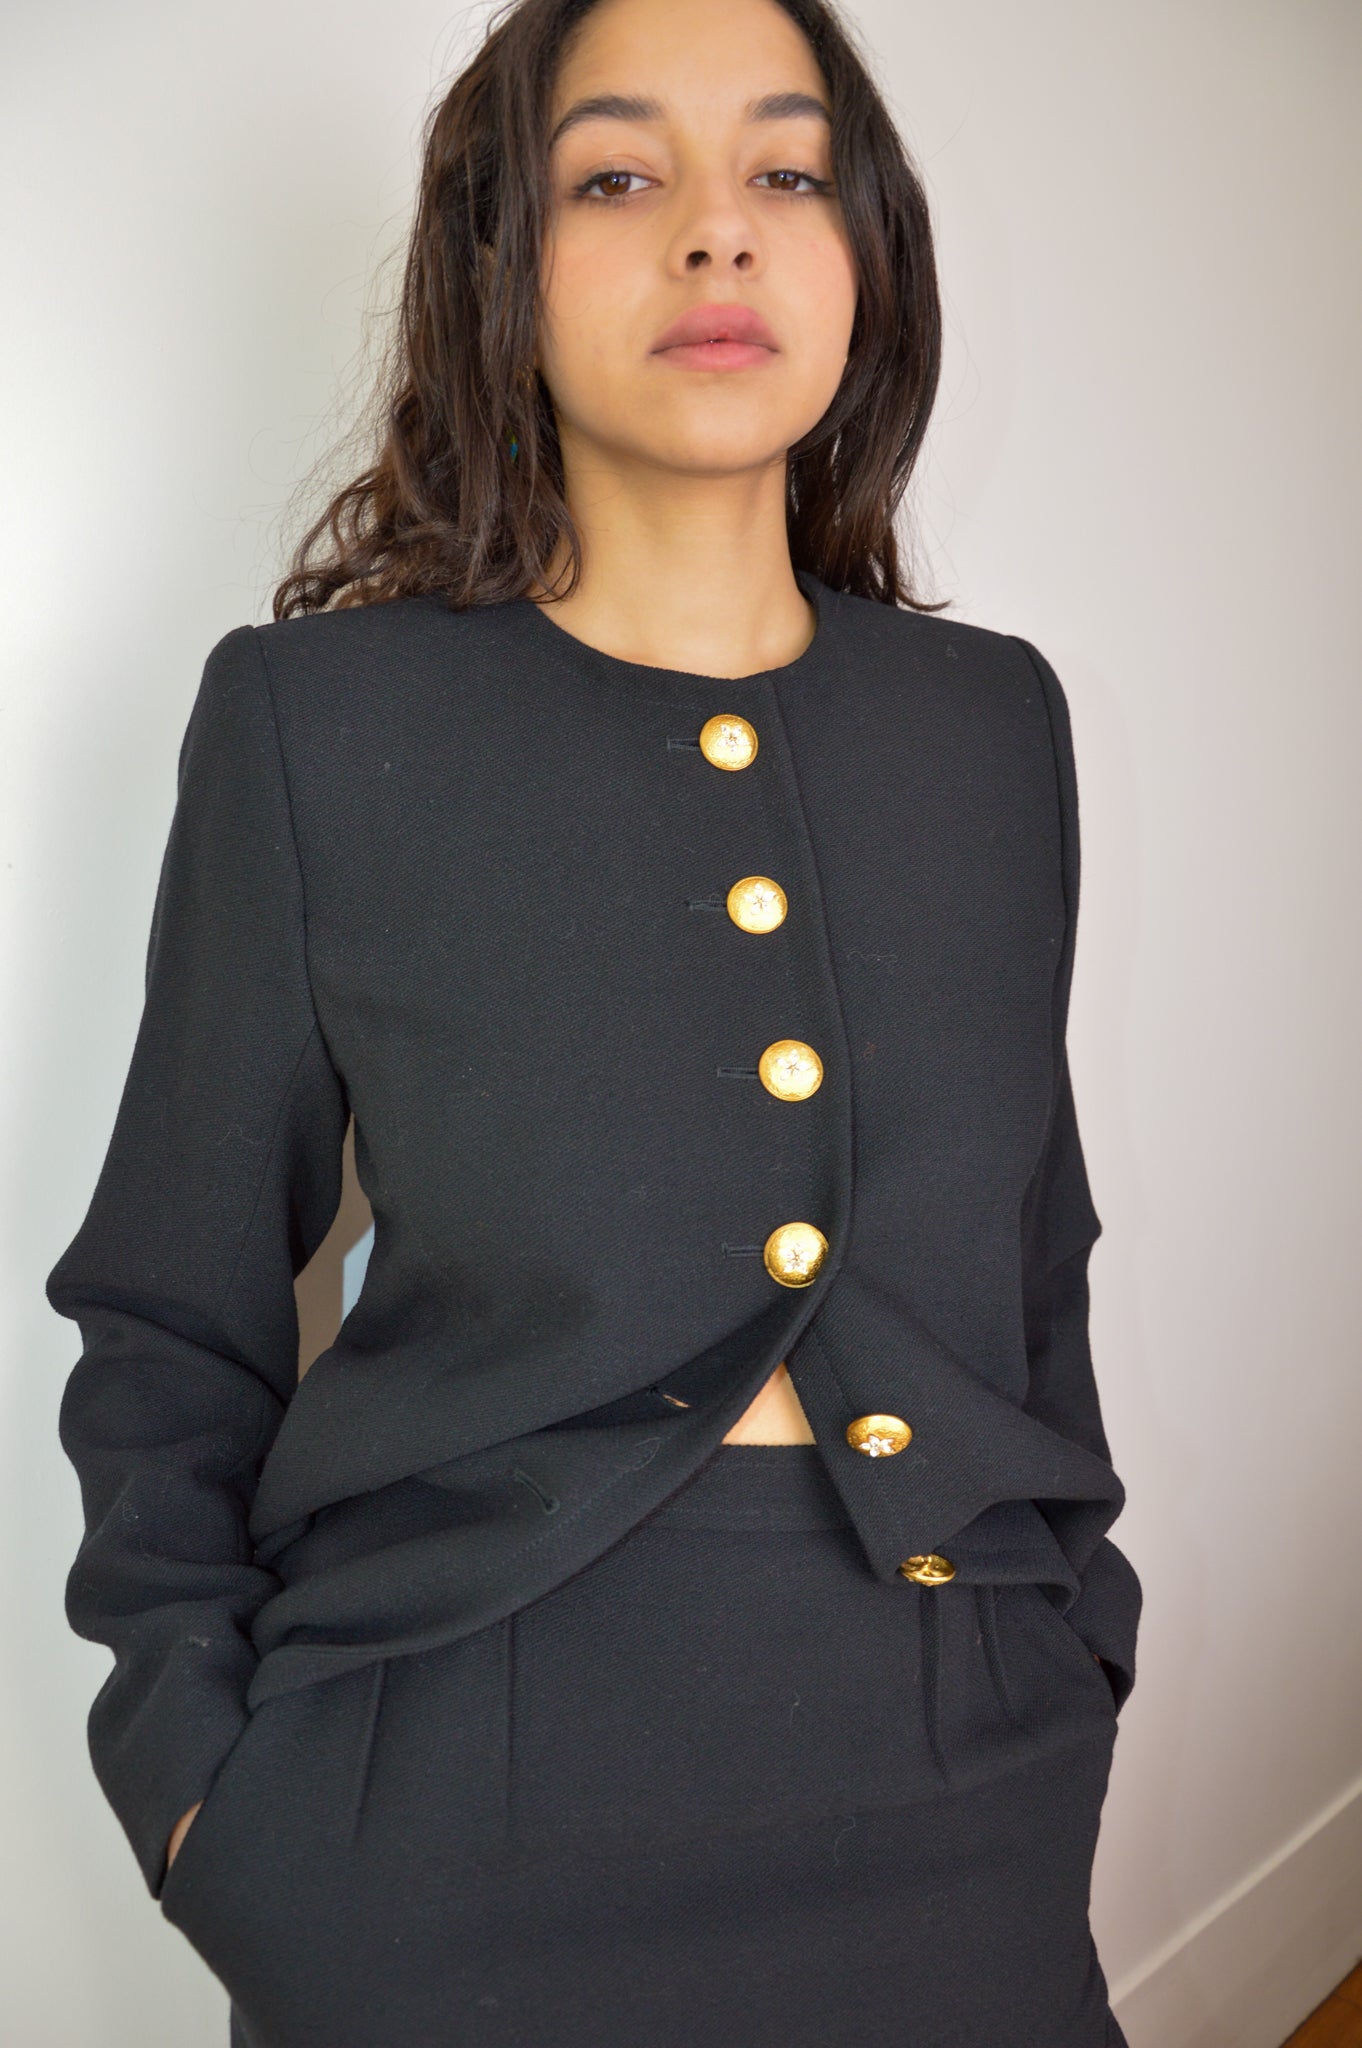 Yves Saint Laurent - Rive Gauche - Black wool crepe skirt suit